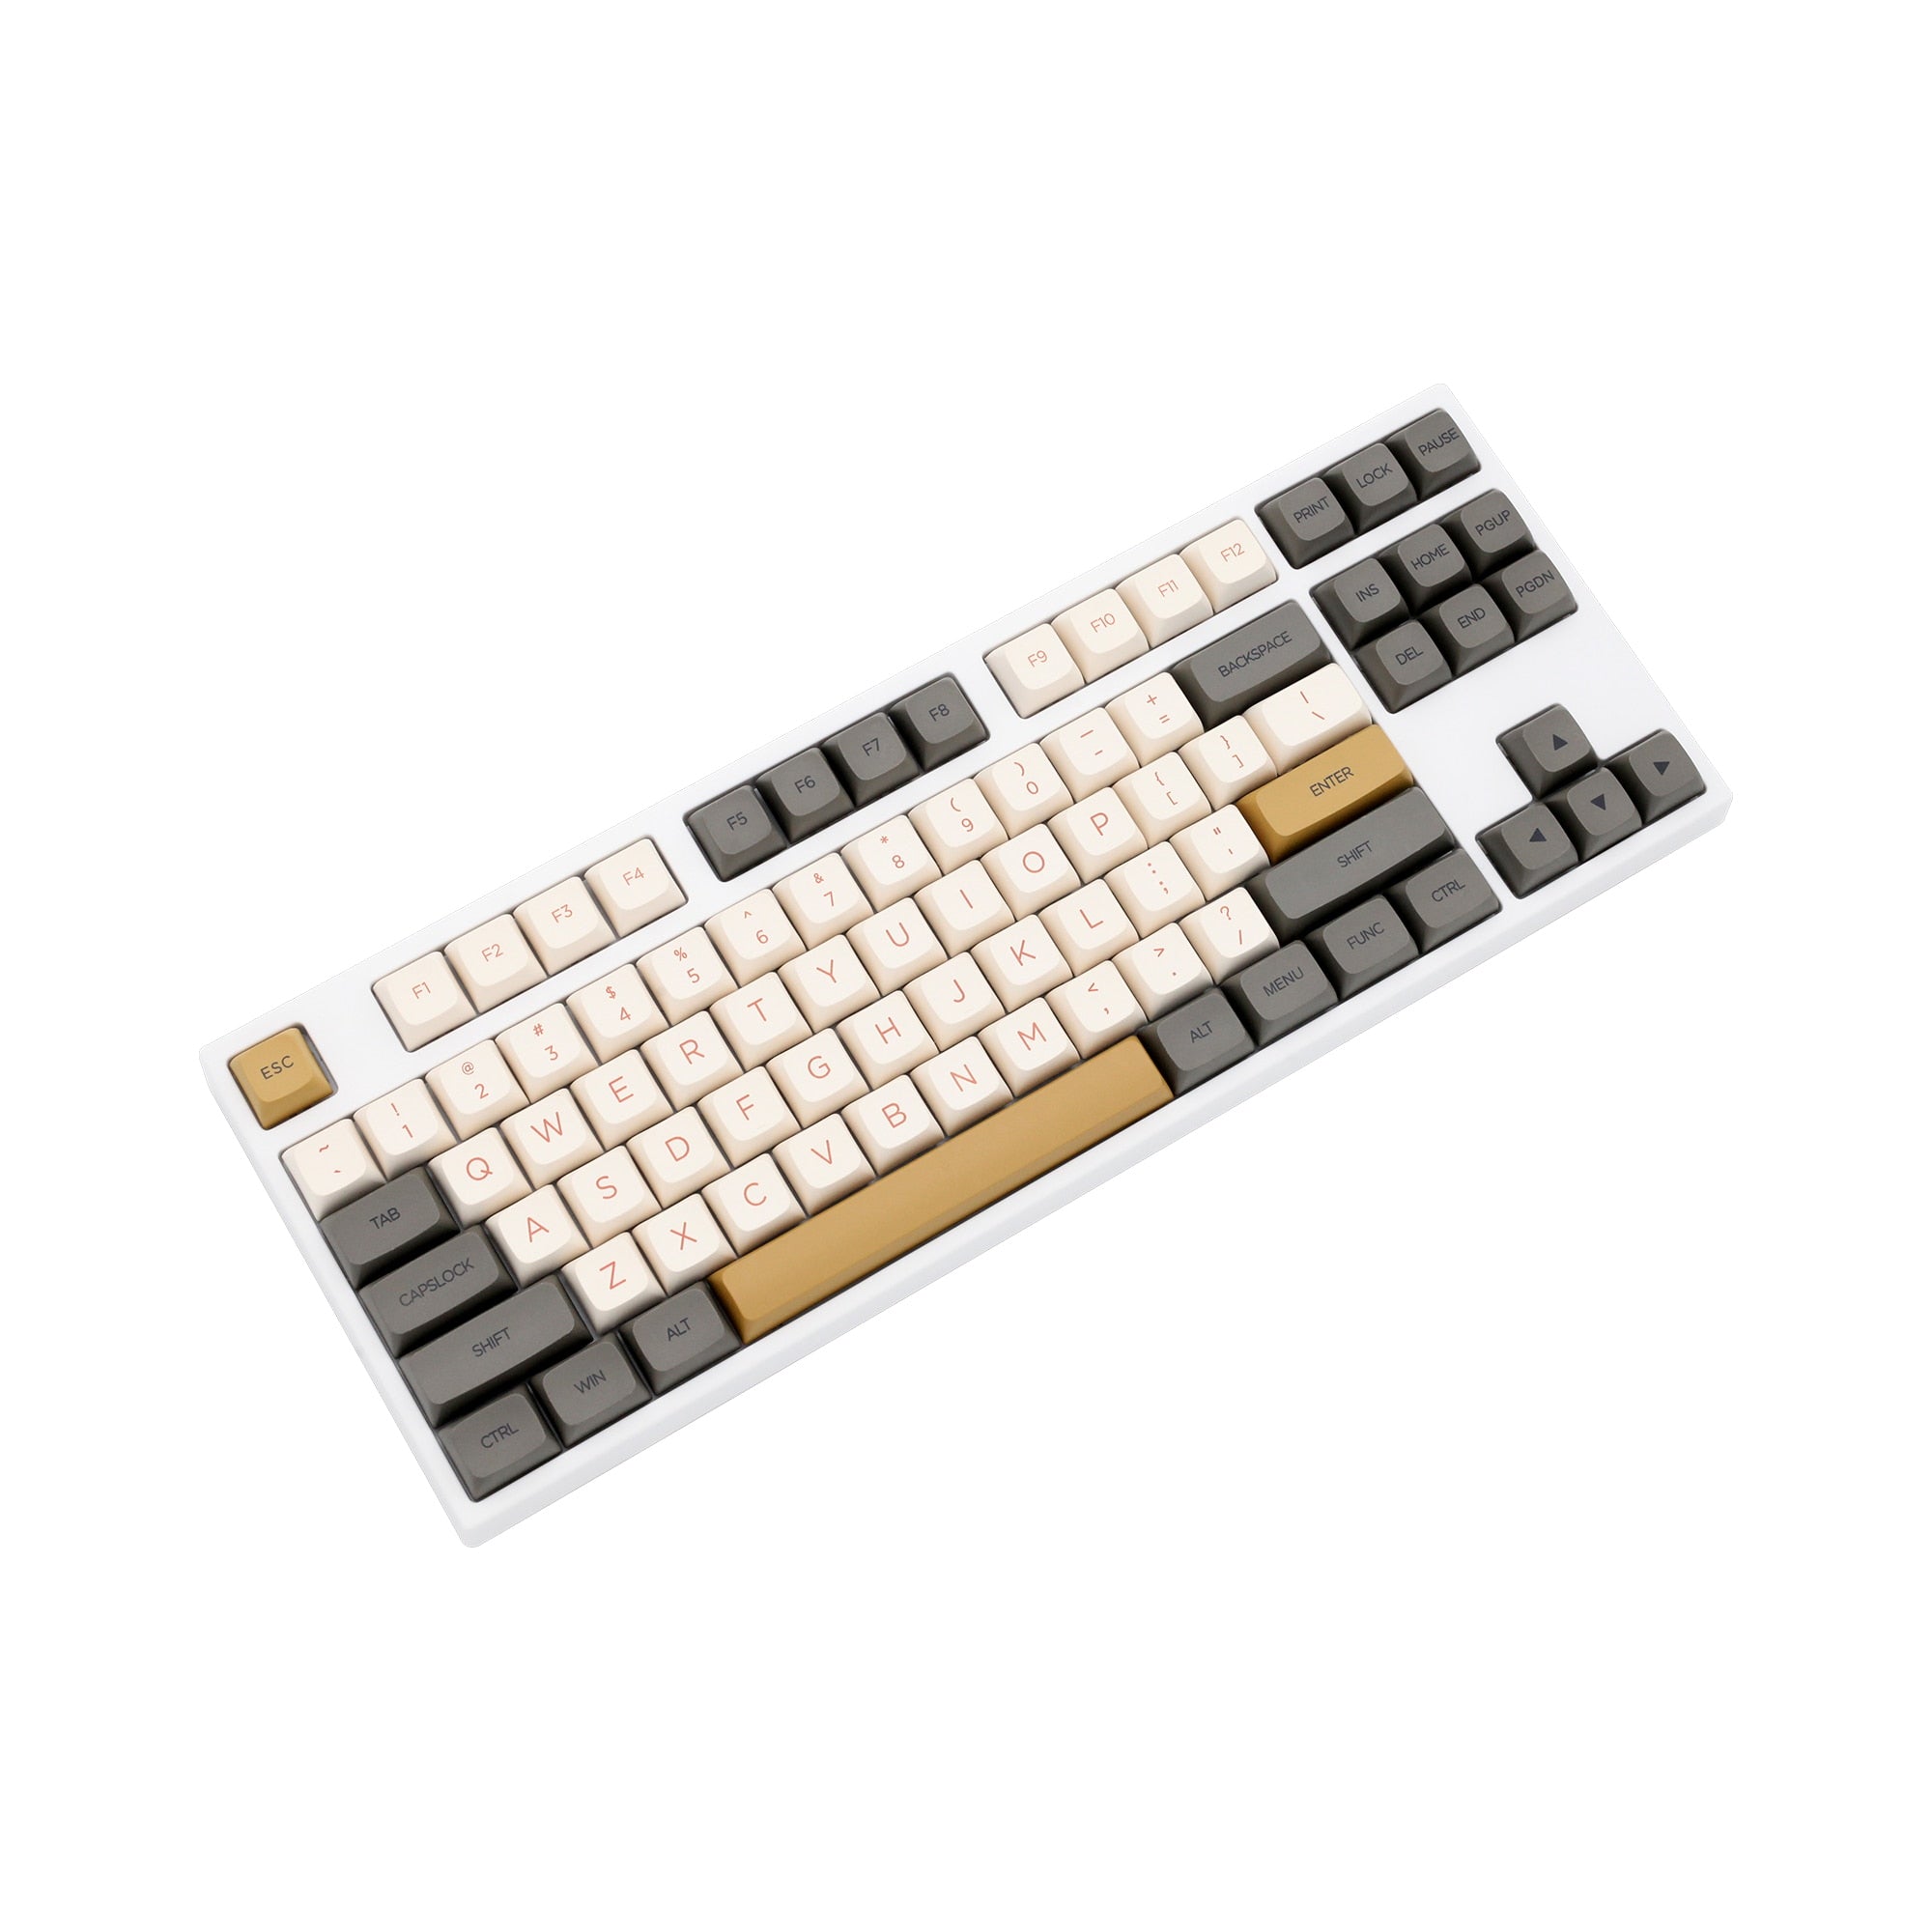 Buy Wholesale China Ergonomic Keyboard Brings You A Higher Level